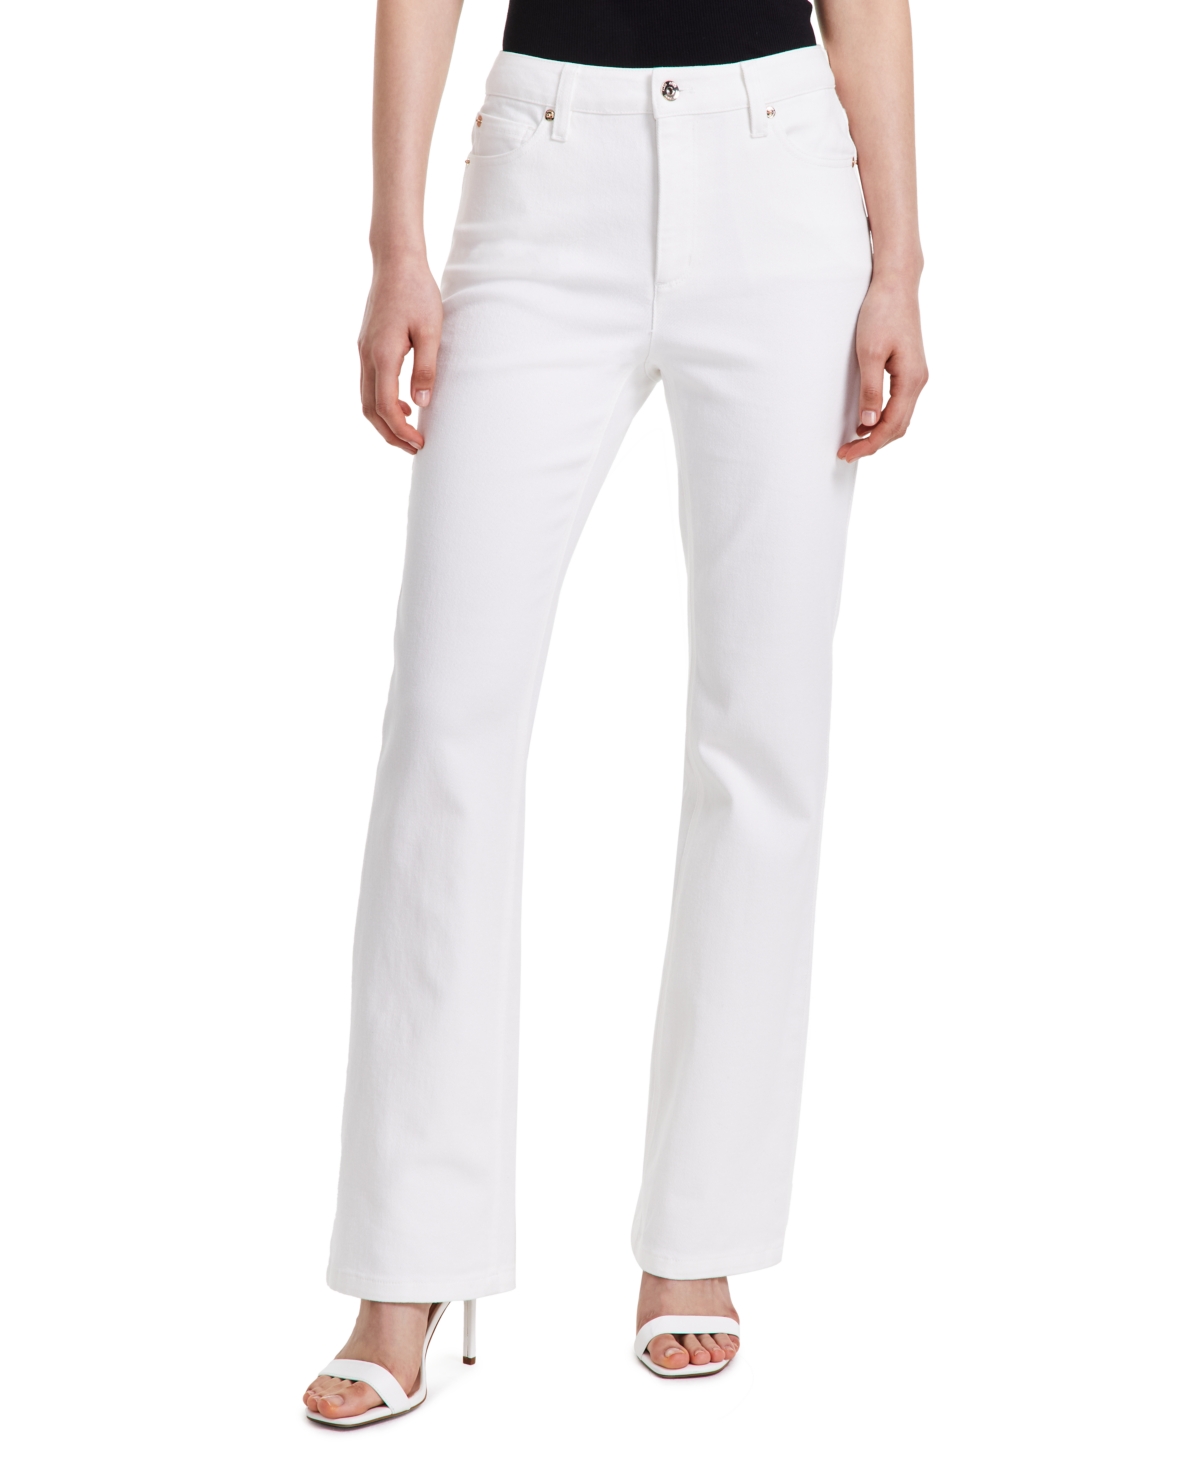 Women's High-Rise Bootcut Jeans - Soft White